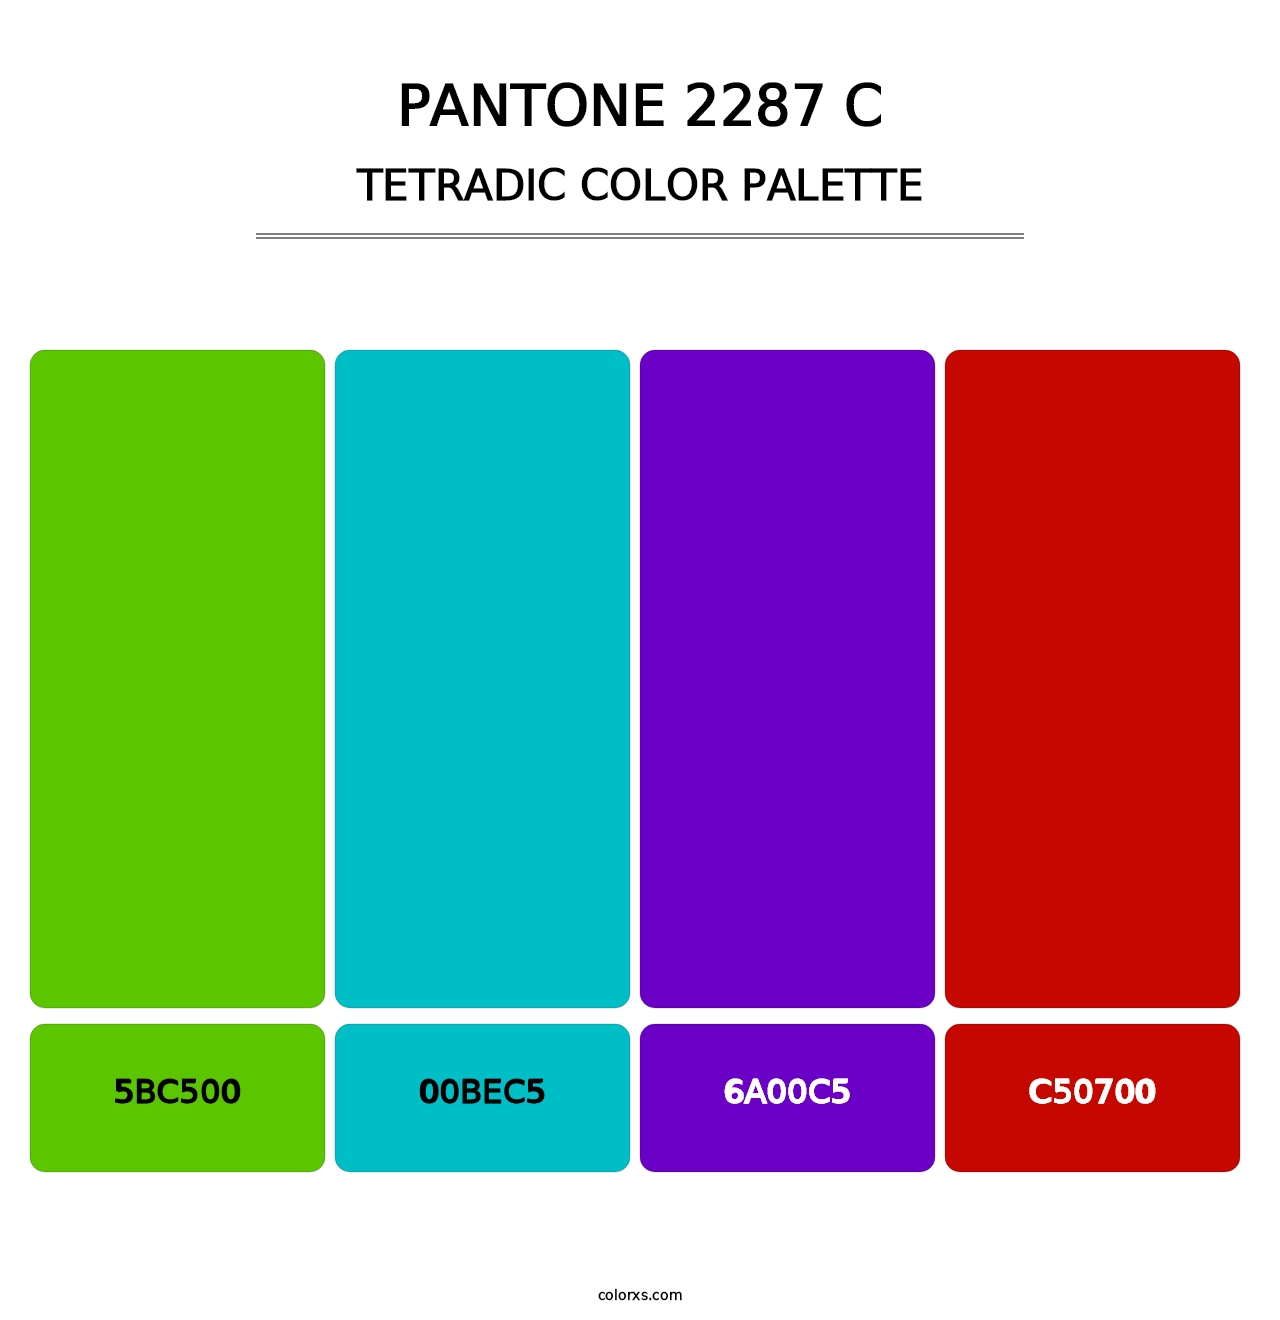 PANTONE 2287 C - Tetradic Color Palette